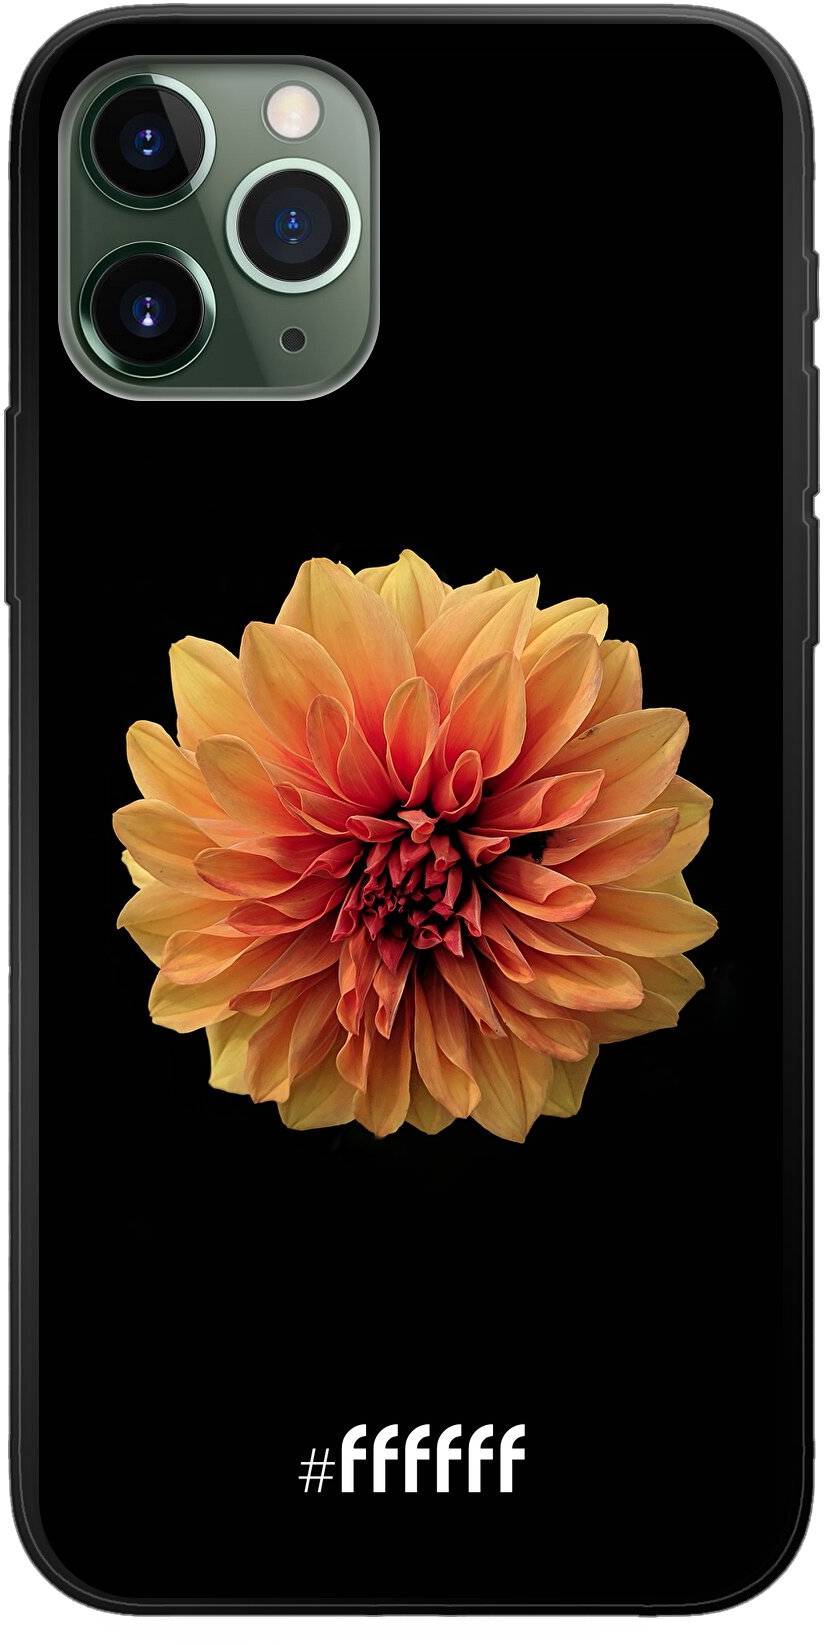 Butterscotch Blossom iPhone 11 Pro